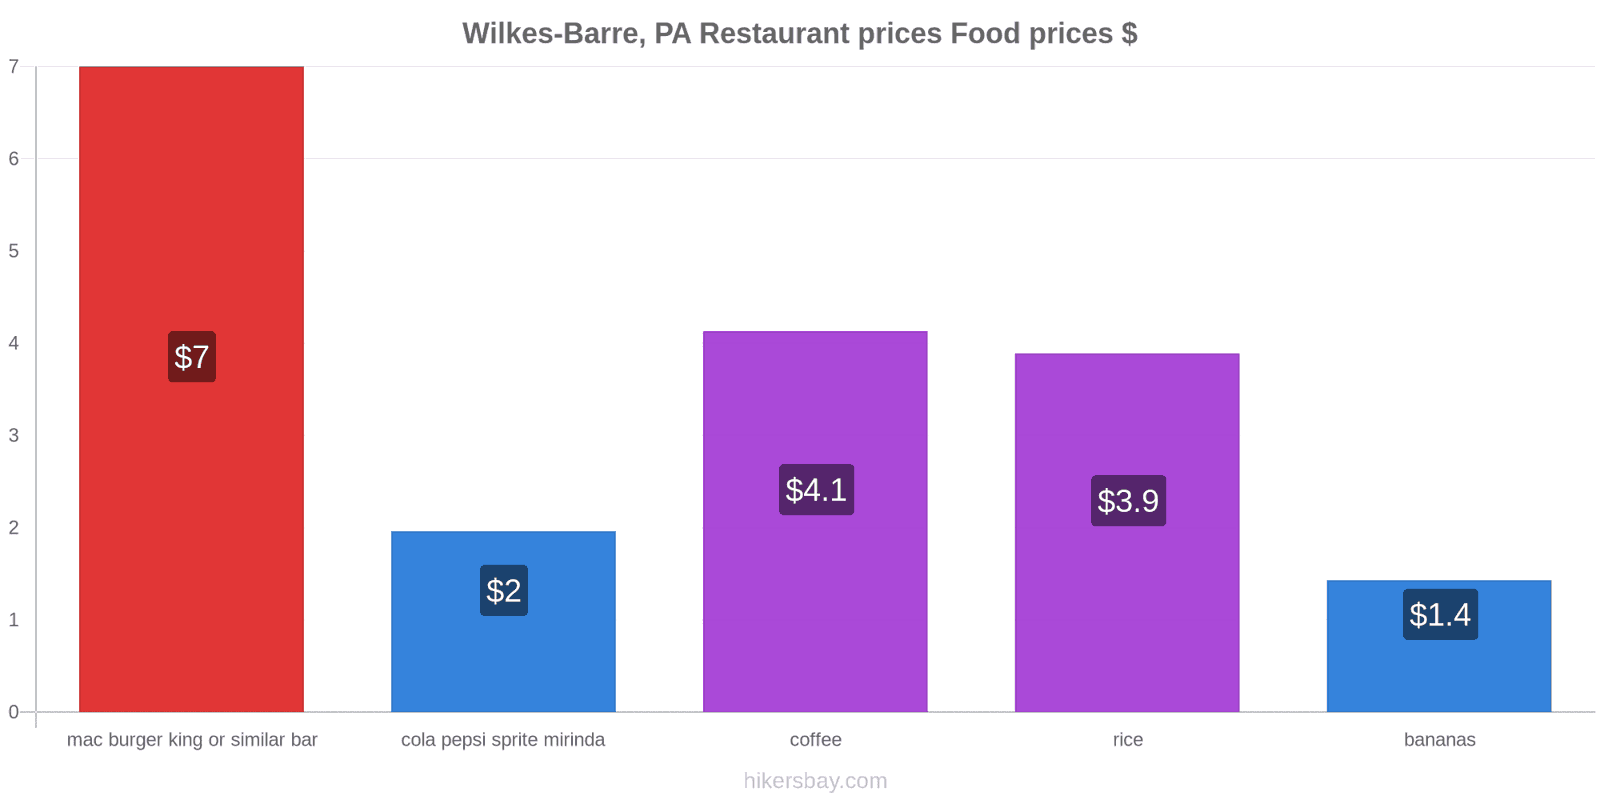 Wilkes-Barre, PA price changes hikersbay.com